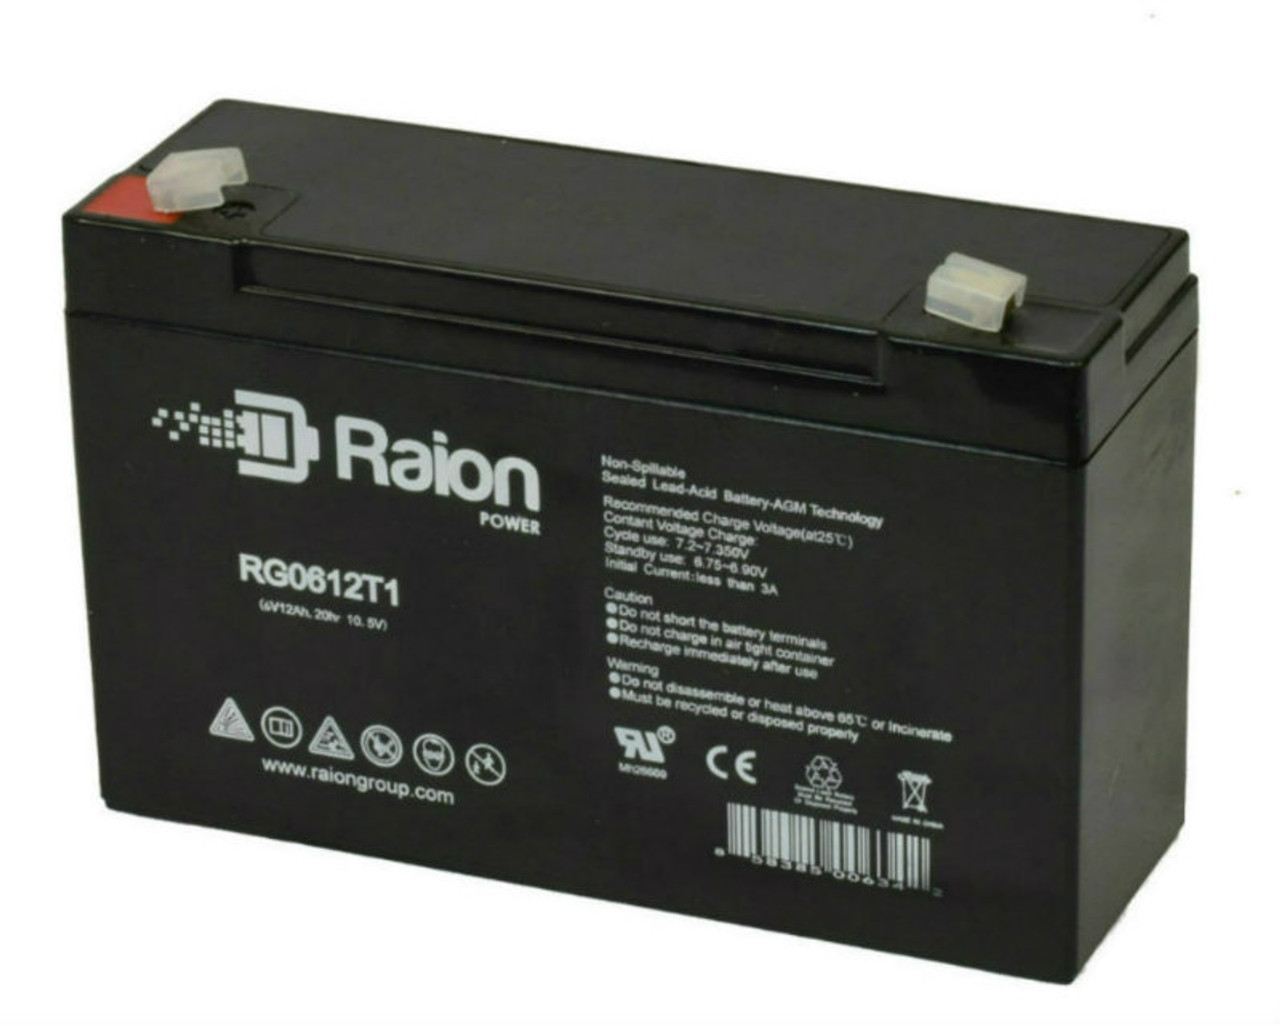 Raion Power RG06120T1 Replacement Emergency Light Battery for ELS ELS ROBOT JR